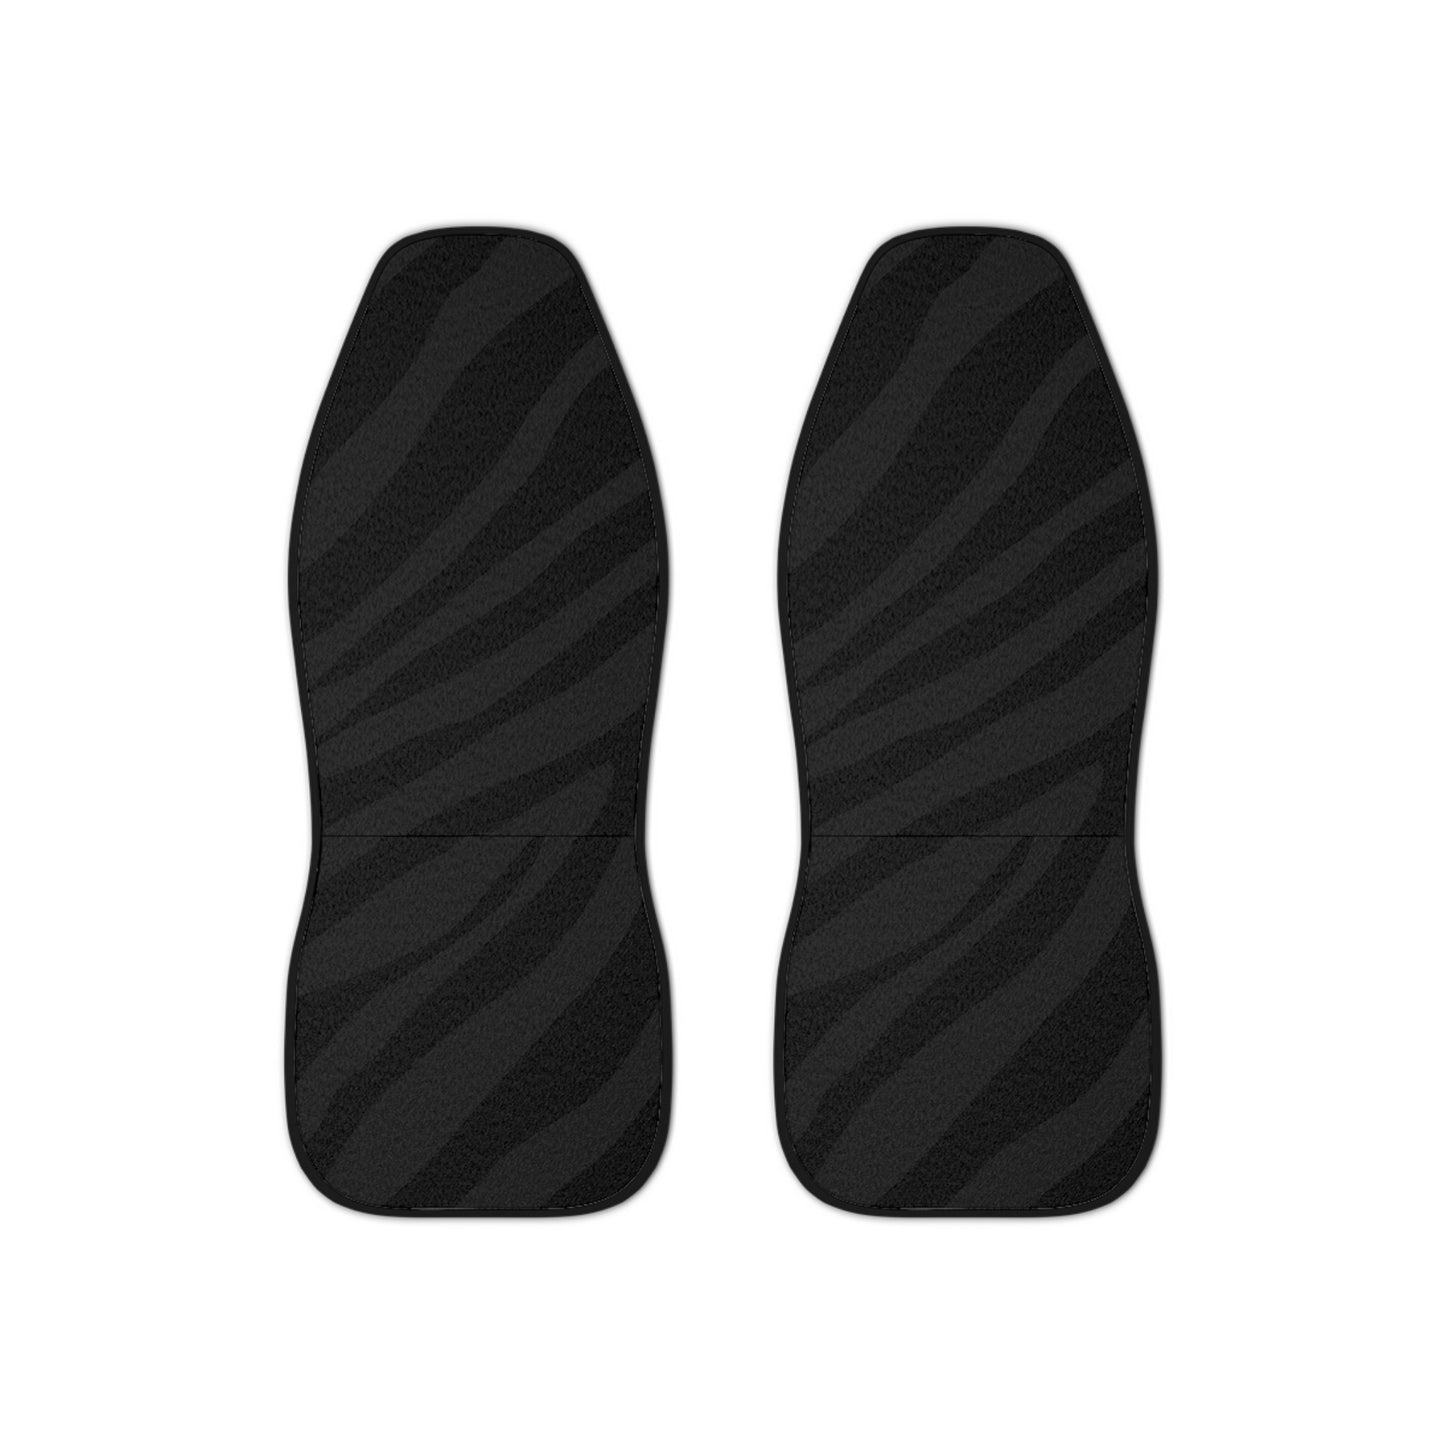 Black Zebra Car Seat Cover